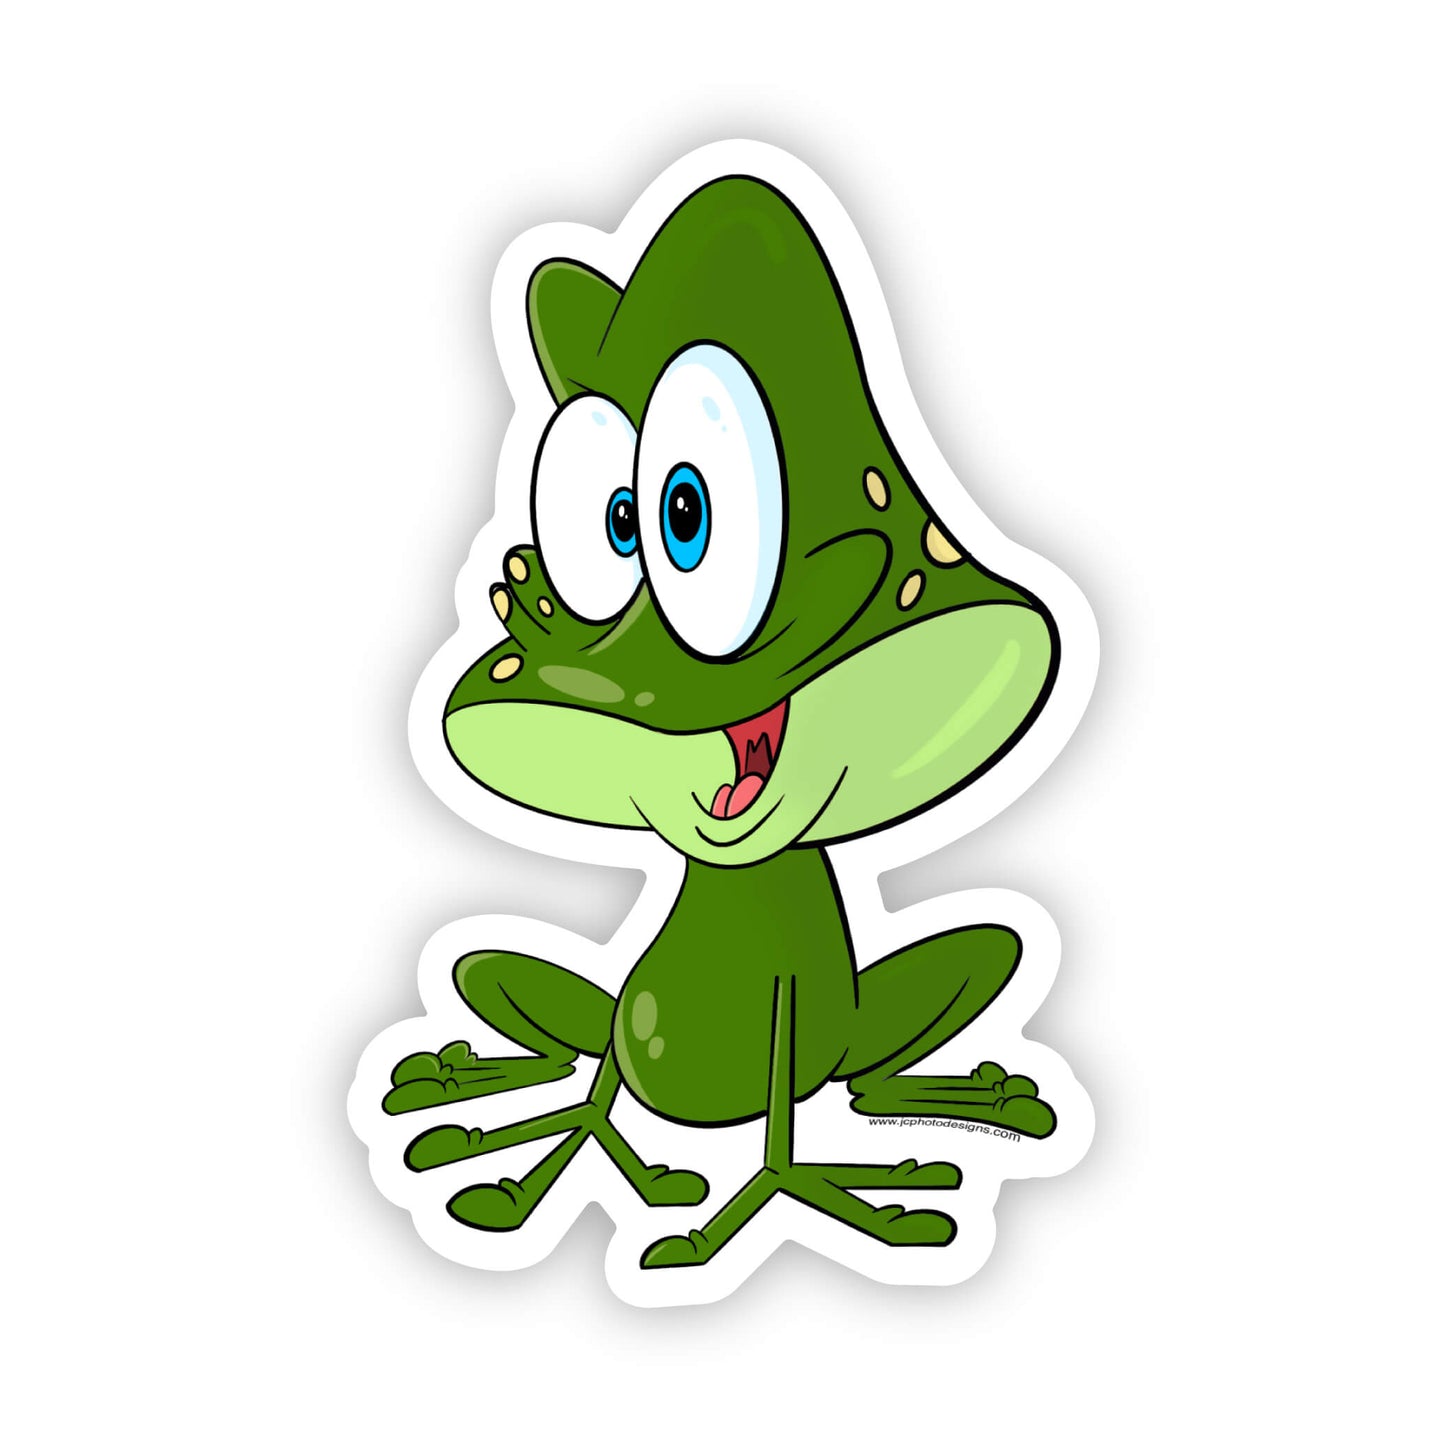 Animated Green Frog Sticker - Playful Cartoon Amphibian Sticker